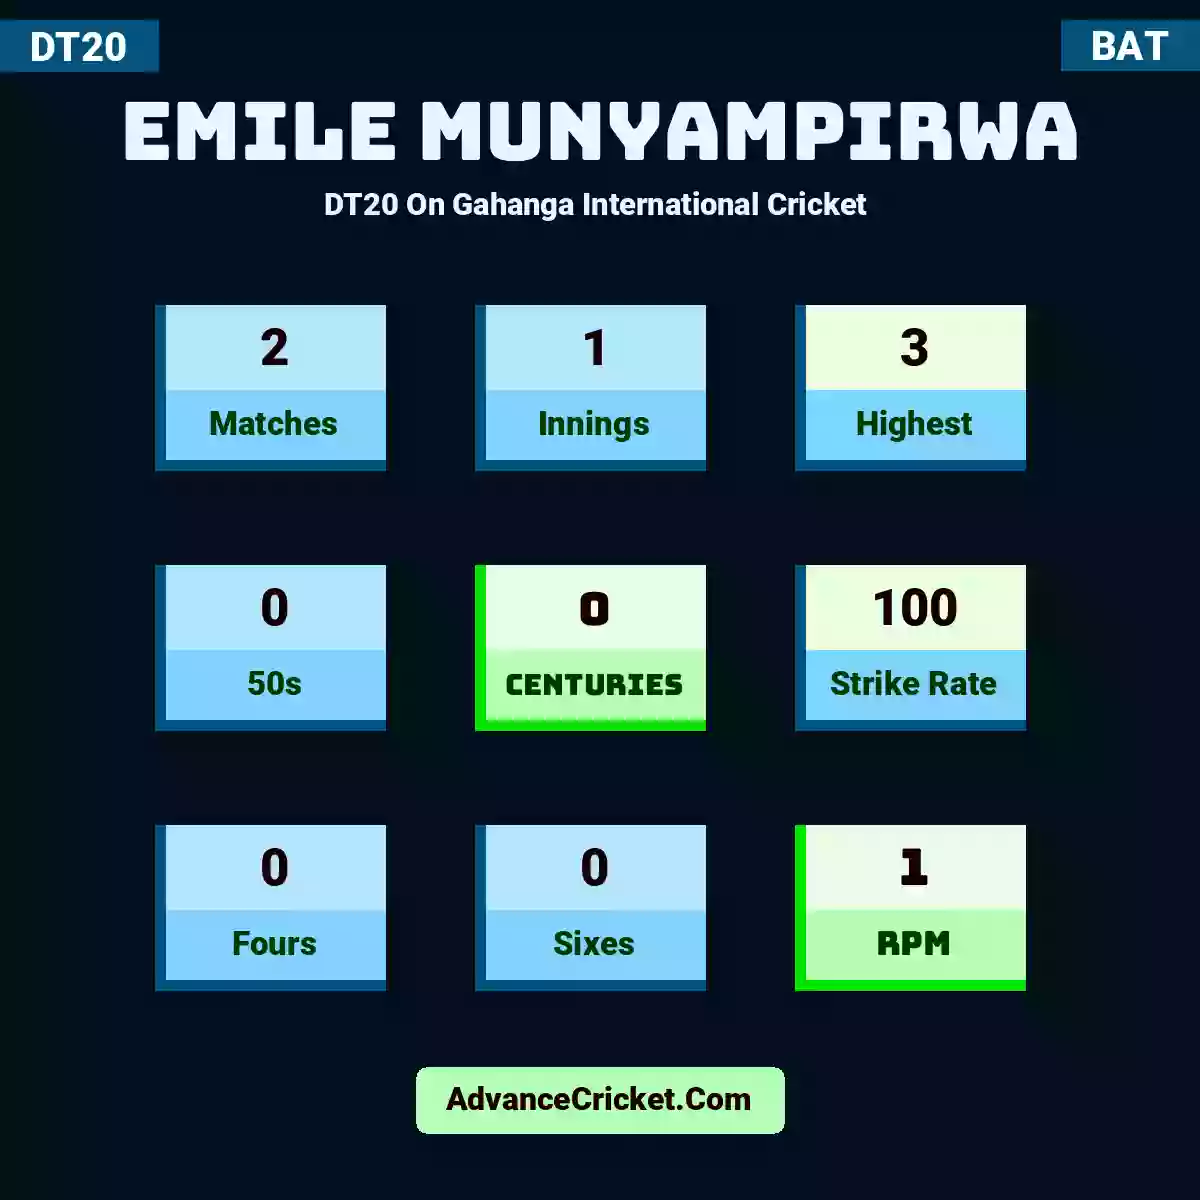 Emile Munyampirwa DT20  On Gahanga International Cricket , Emile Munyampirwa played 2 matches, scored 3 runs as highest, 0 half-centuries, and 0 centuries, with a strike rate of 100. E.Munyampirwa hit 0 fours and 0 sixes, with an RPM of 1.